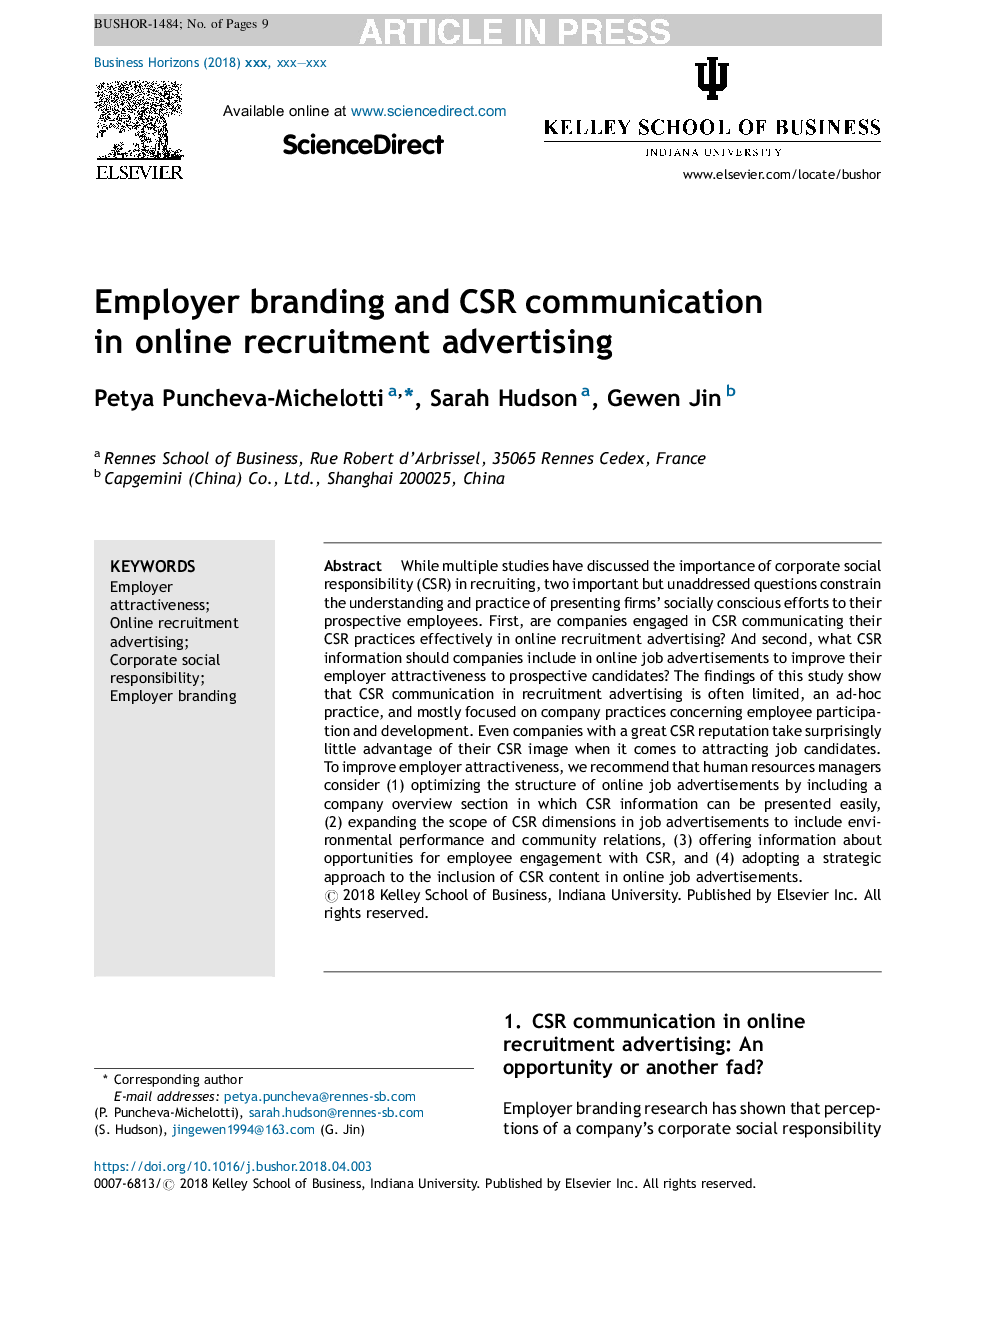 Employer branding and CSR communication in online recruitment advertising